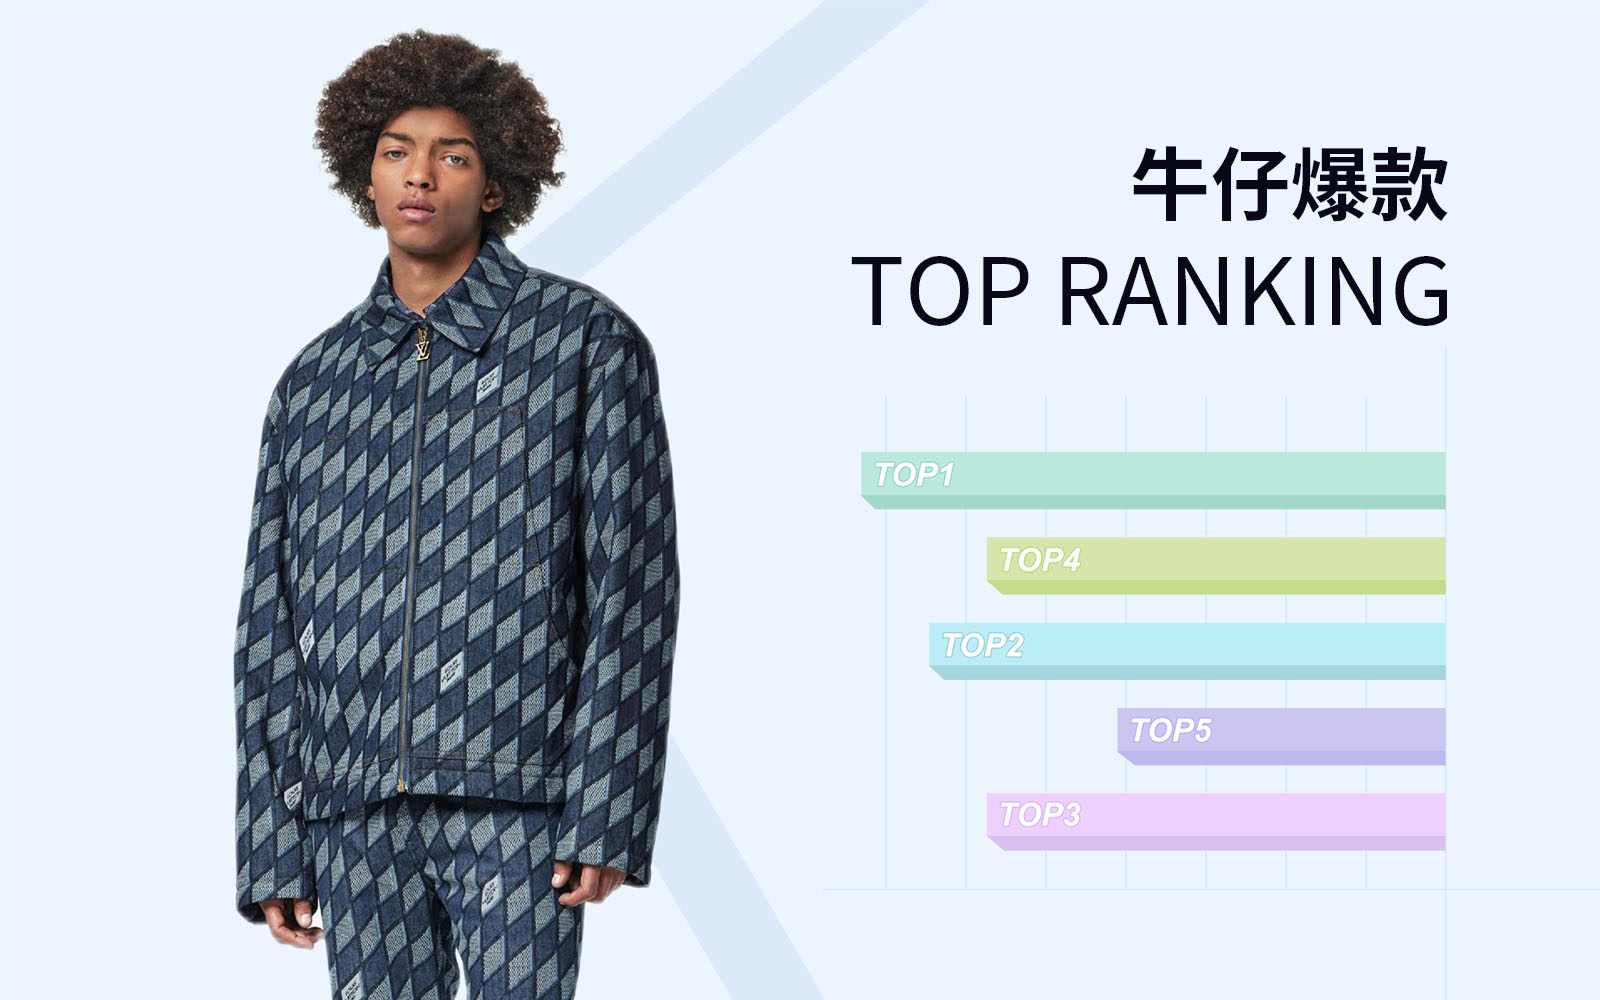 Denim -- The TOP Ranking of Menswear